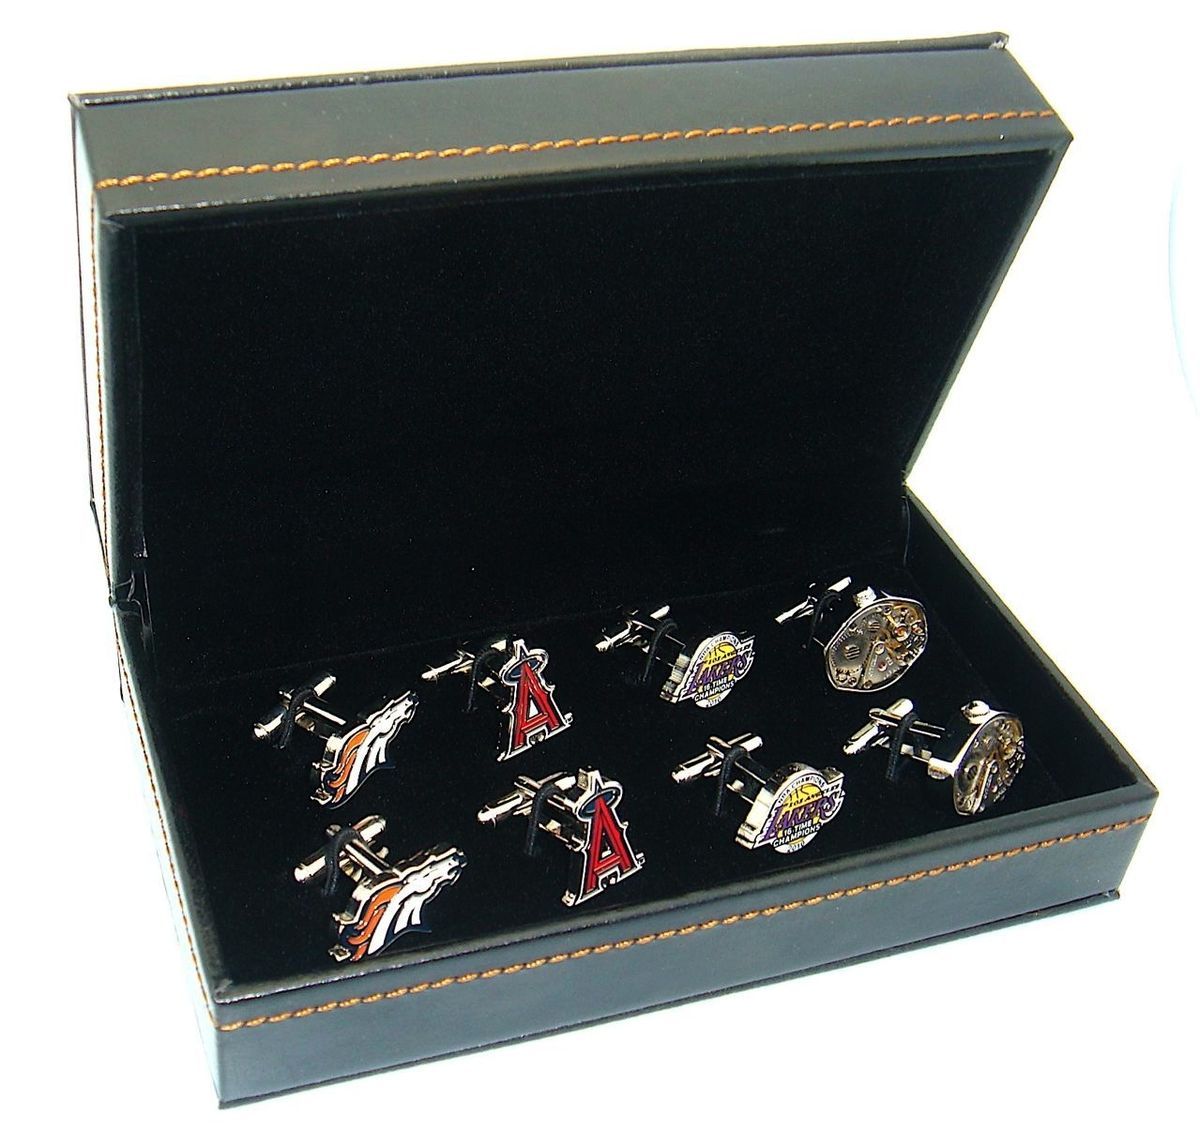  Black Leather Cufflinks Storage Mens Box Jewelry 4 Pairs Cuff Links